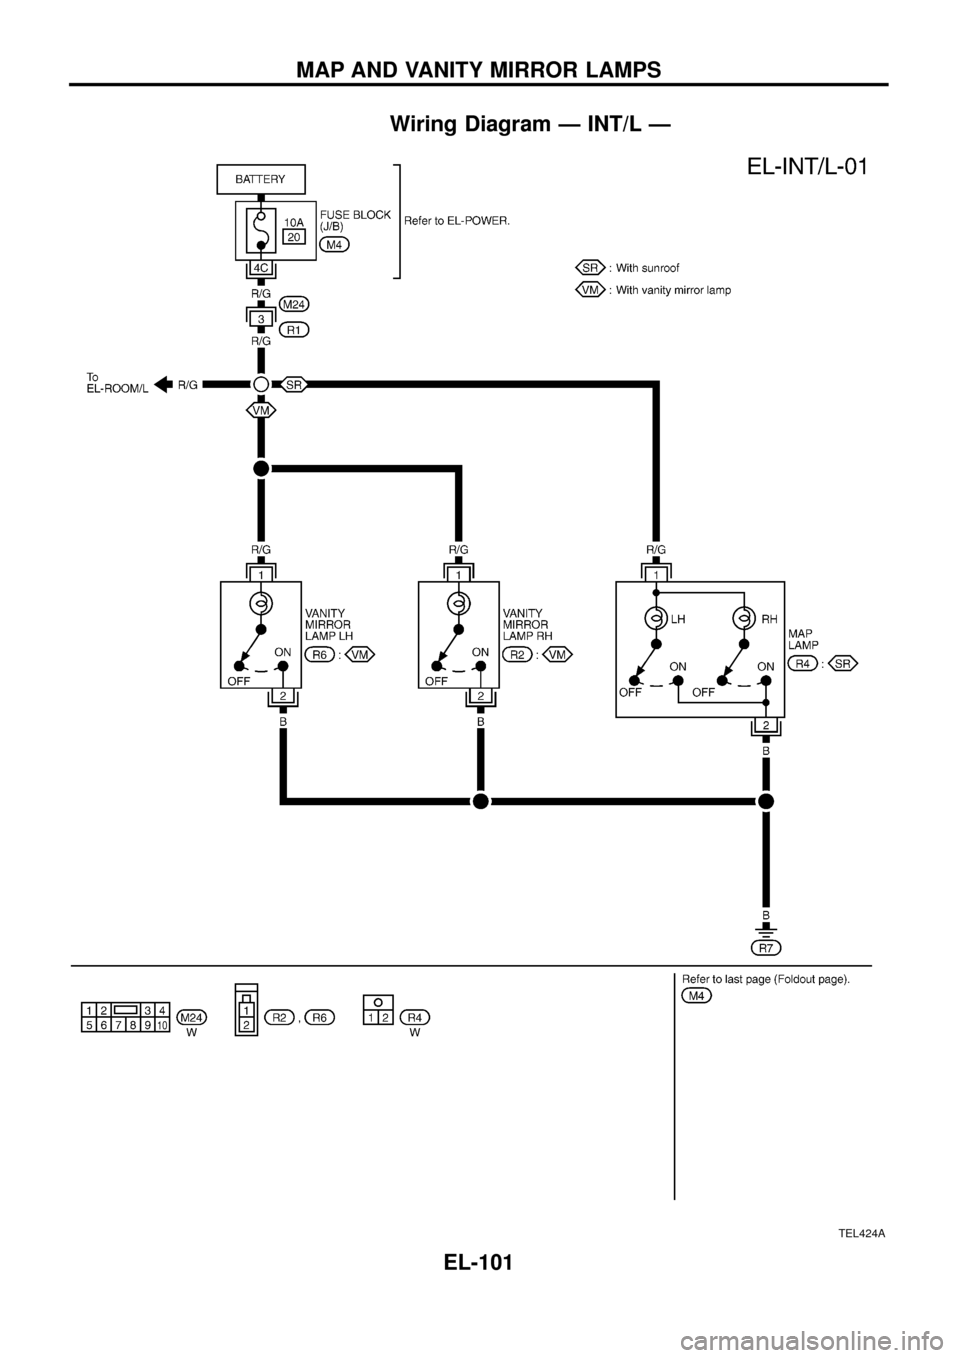 NISSAN PATROL 1998 Y61 / 5.G Electrical System Service Manual Wiring Diagram Ð INT/L Ð
TEL424A
MAP AND VANITY MIRROR LAMPS
EL-101 